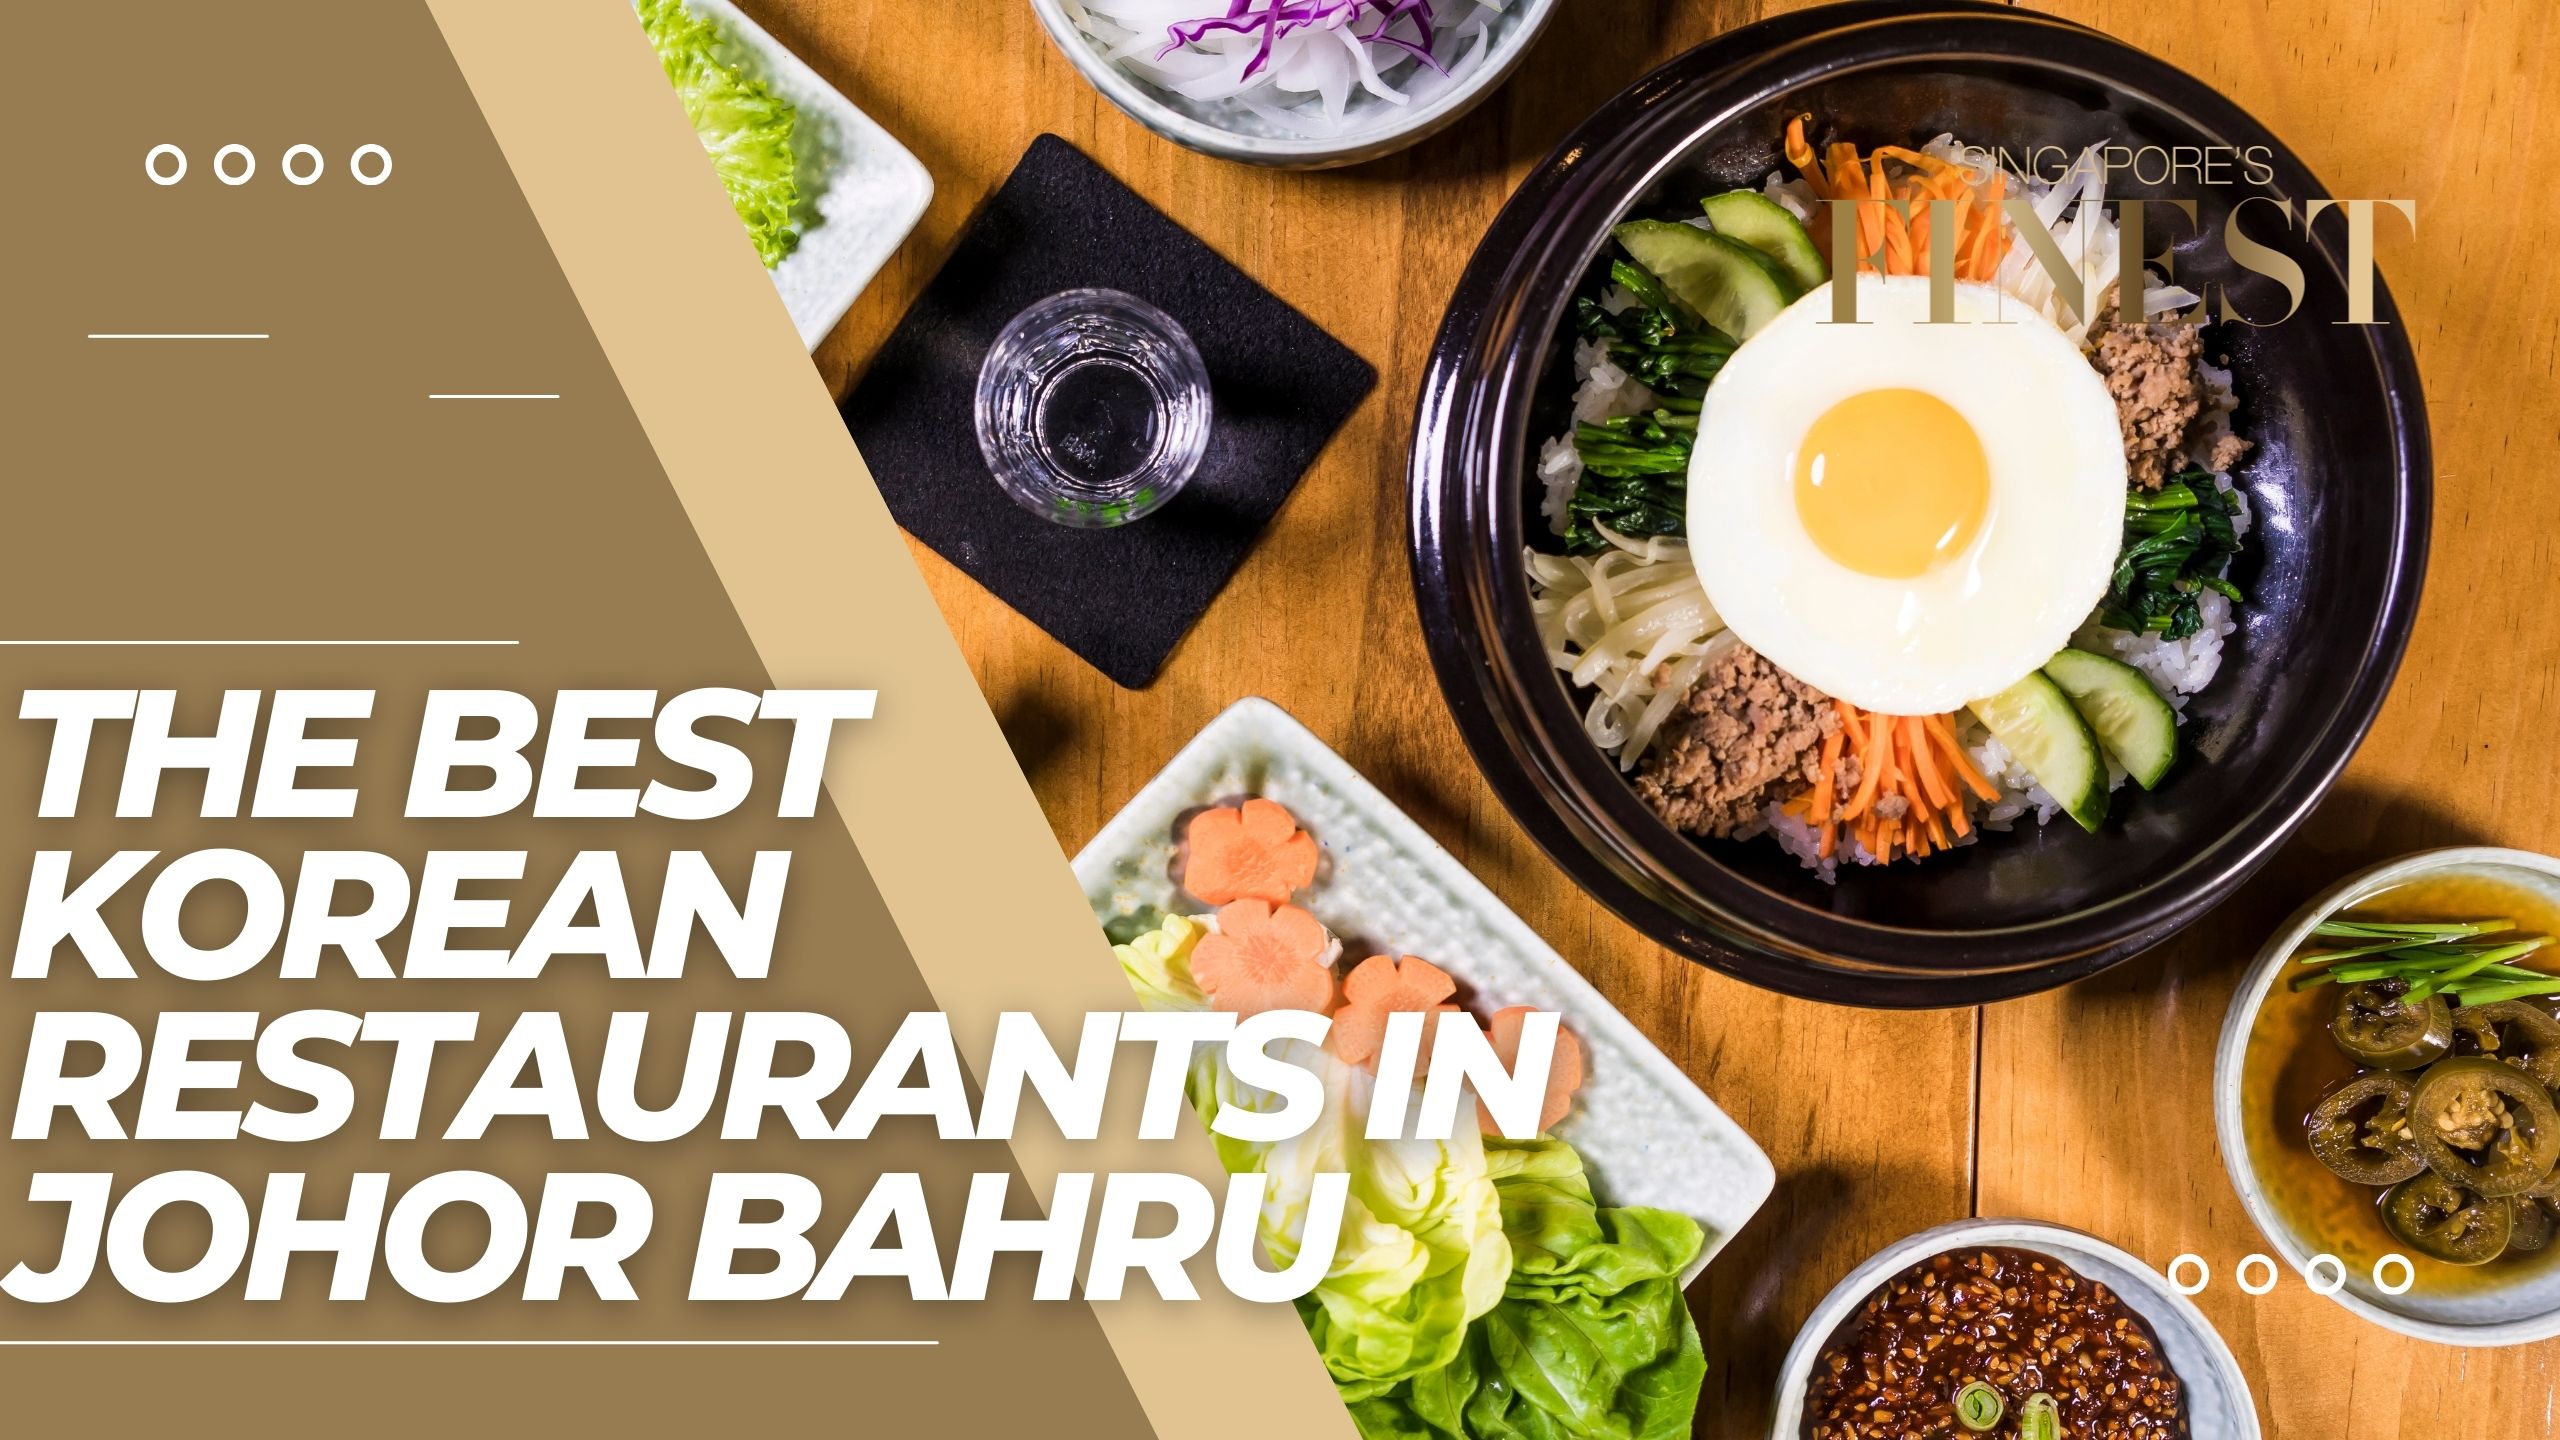 The Finest Korean Restaurants in Johor Bahru